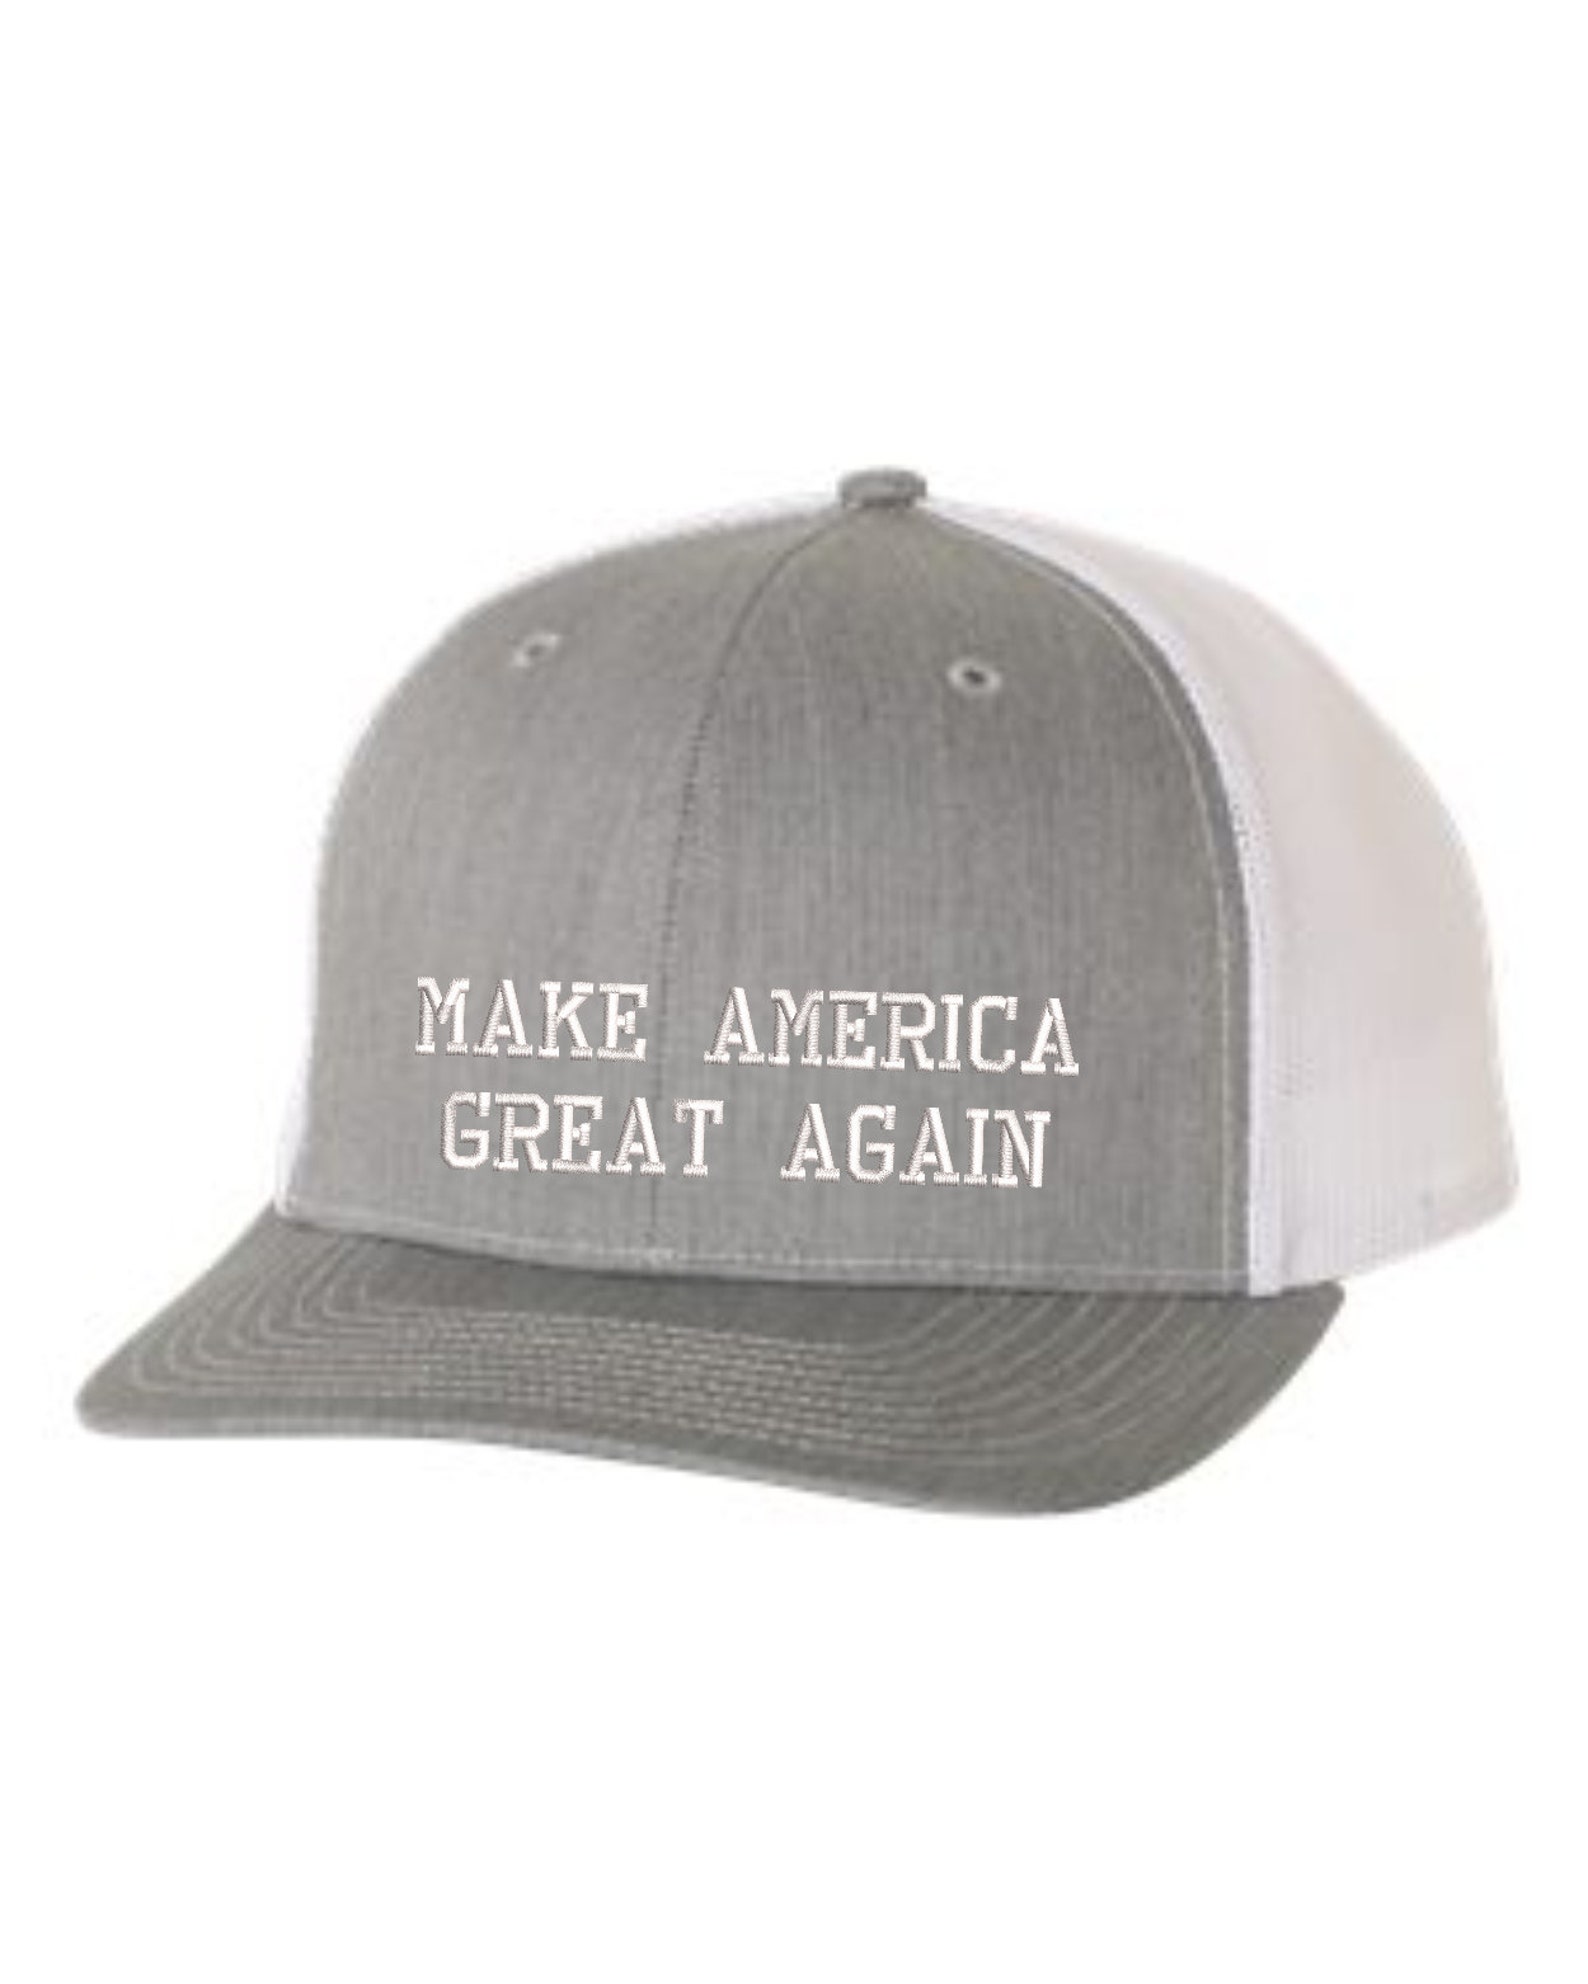 MEGA Hat Make America Great Again Richardson 112 Trump 2020 | Etsy